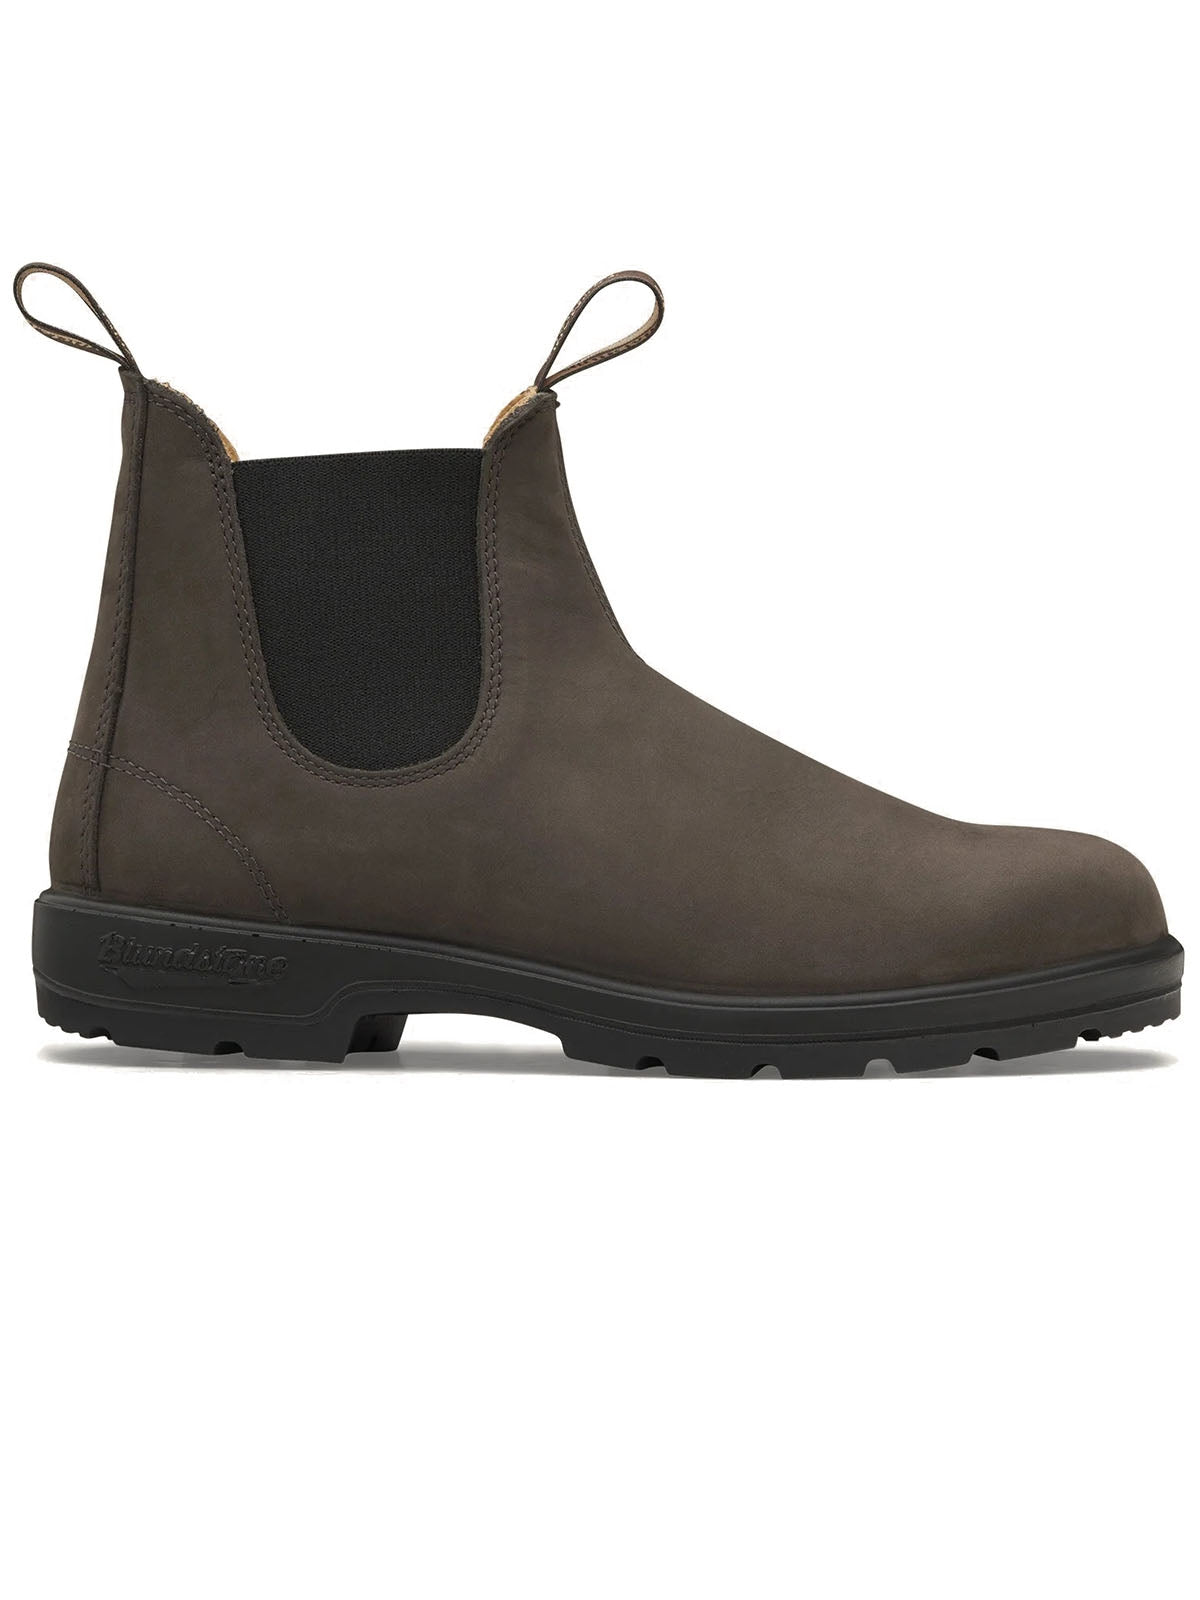 Stivali Uomo Blundstone - 2345 Premium Leather Lined Elastic Sided Boot - Marrone